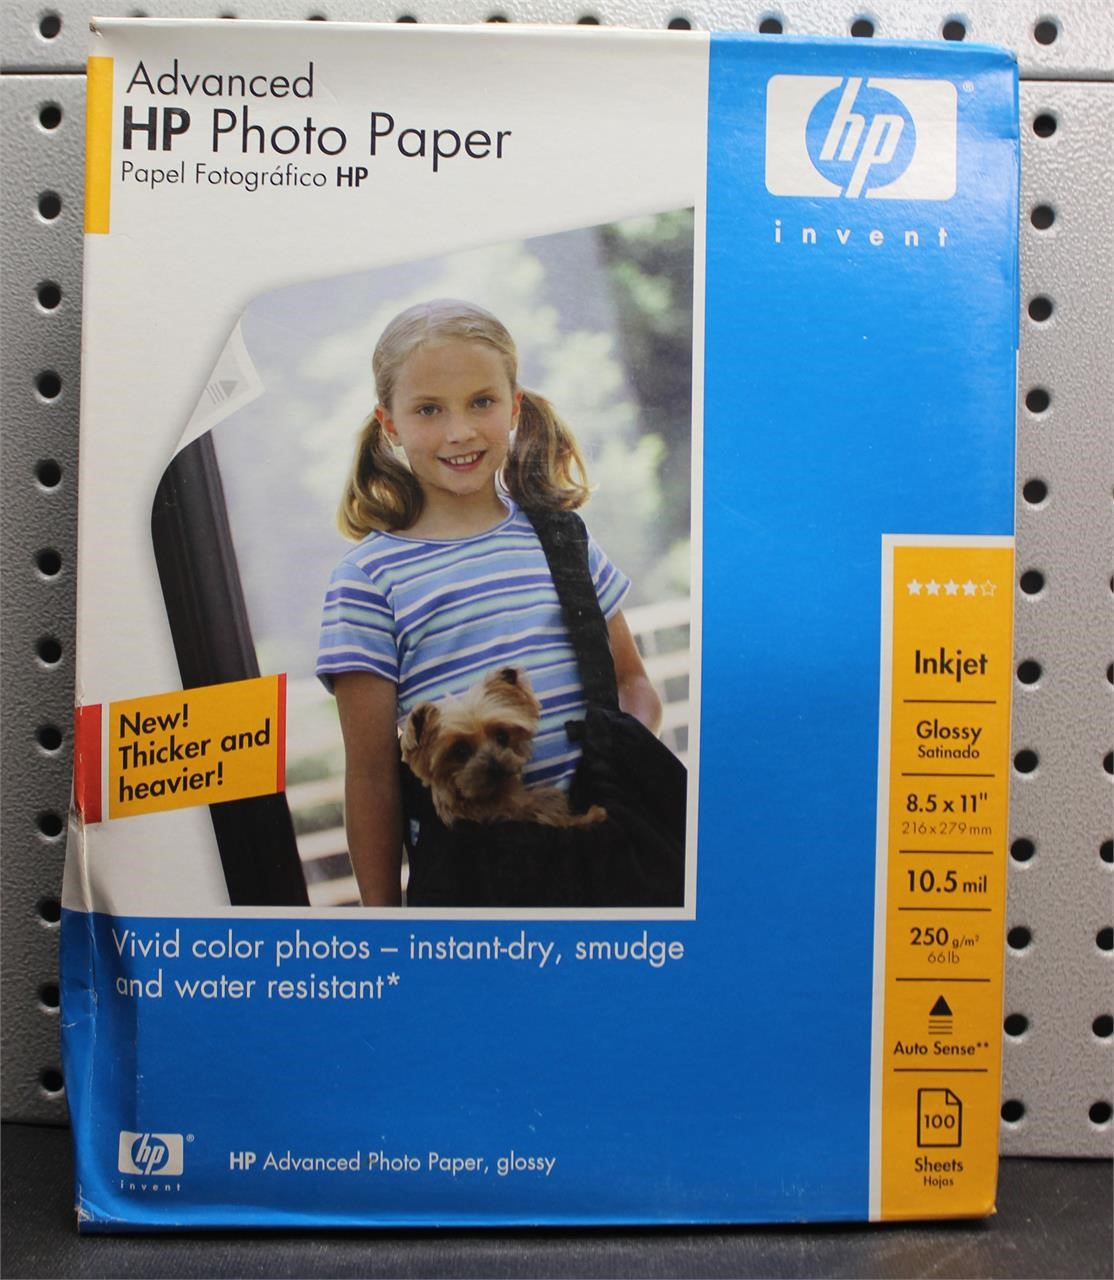 Advanced HP Photo Paper